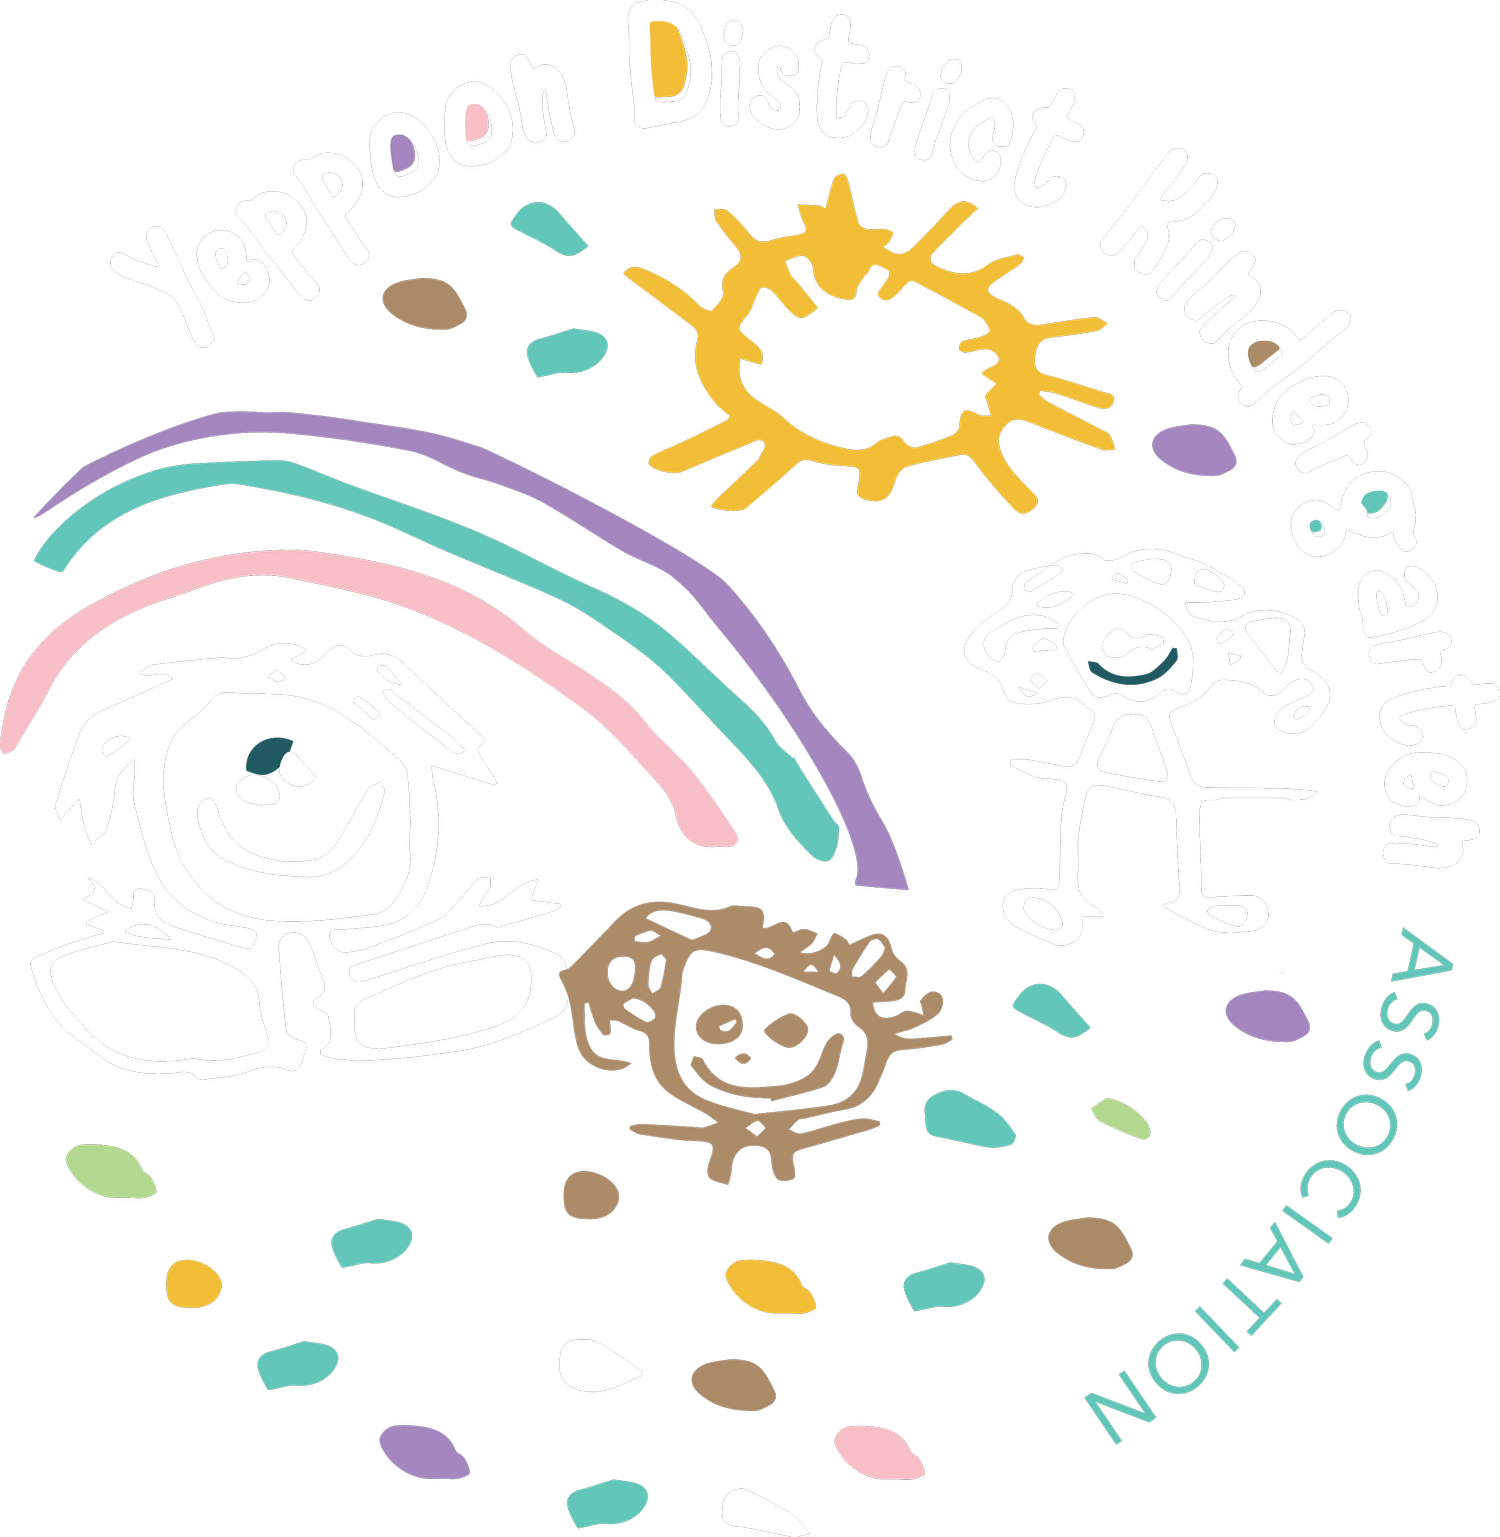 Yeppoon District Kindergarten